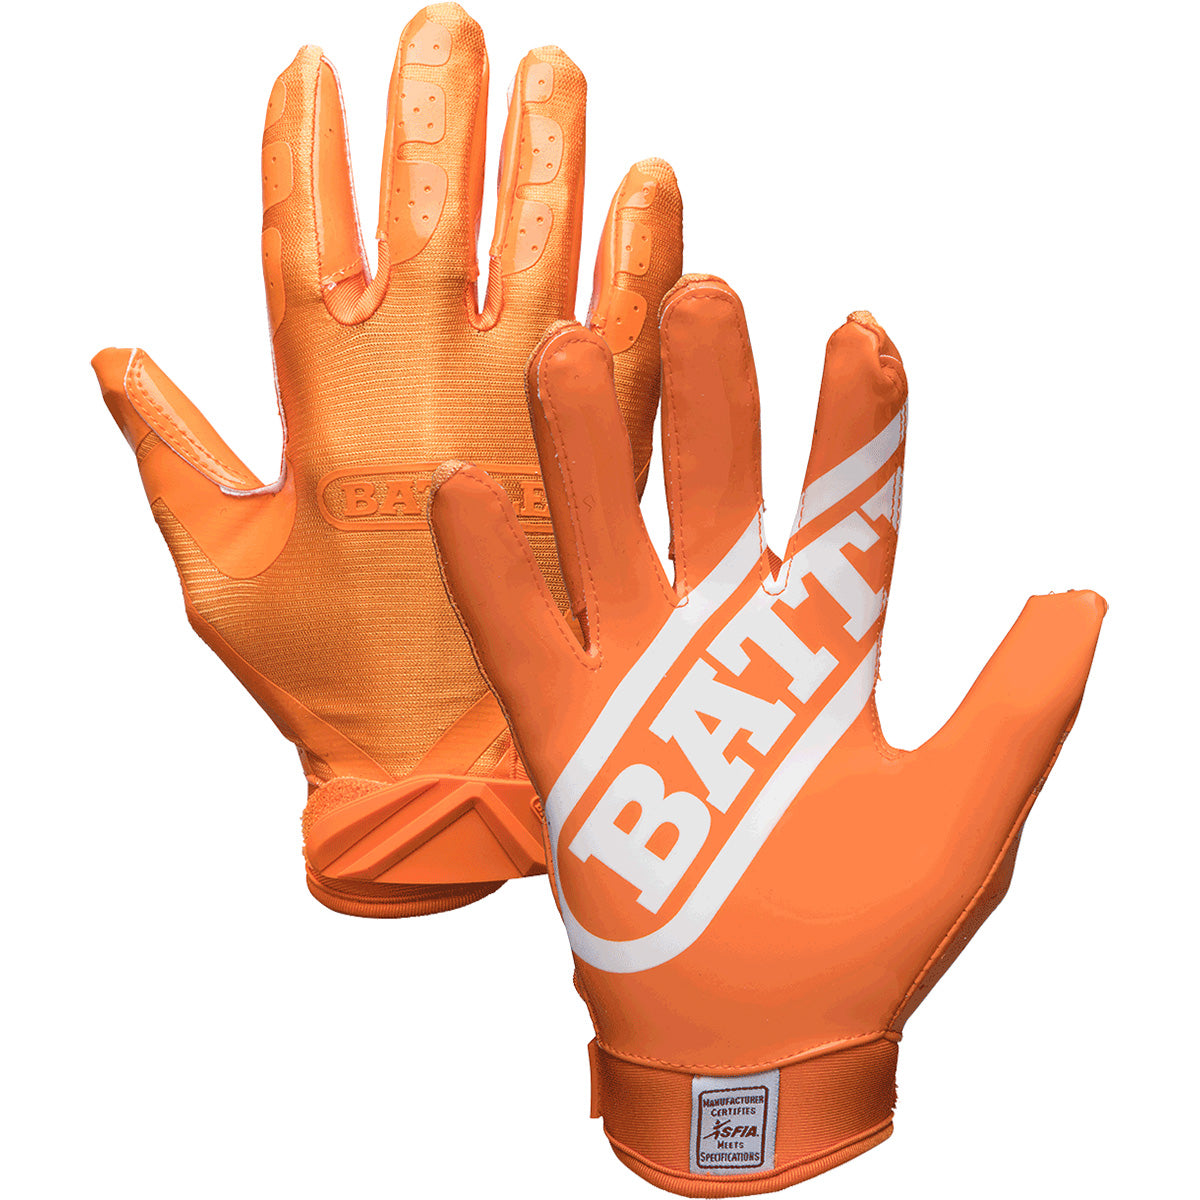 Battle Sports Youth DoubleThreat Football Gloves - Orange/Orange Battle Sports